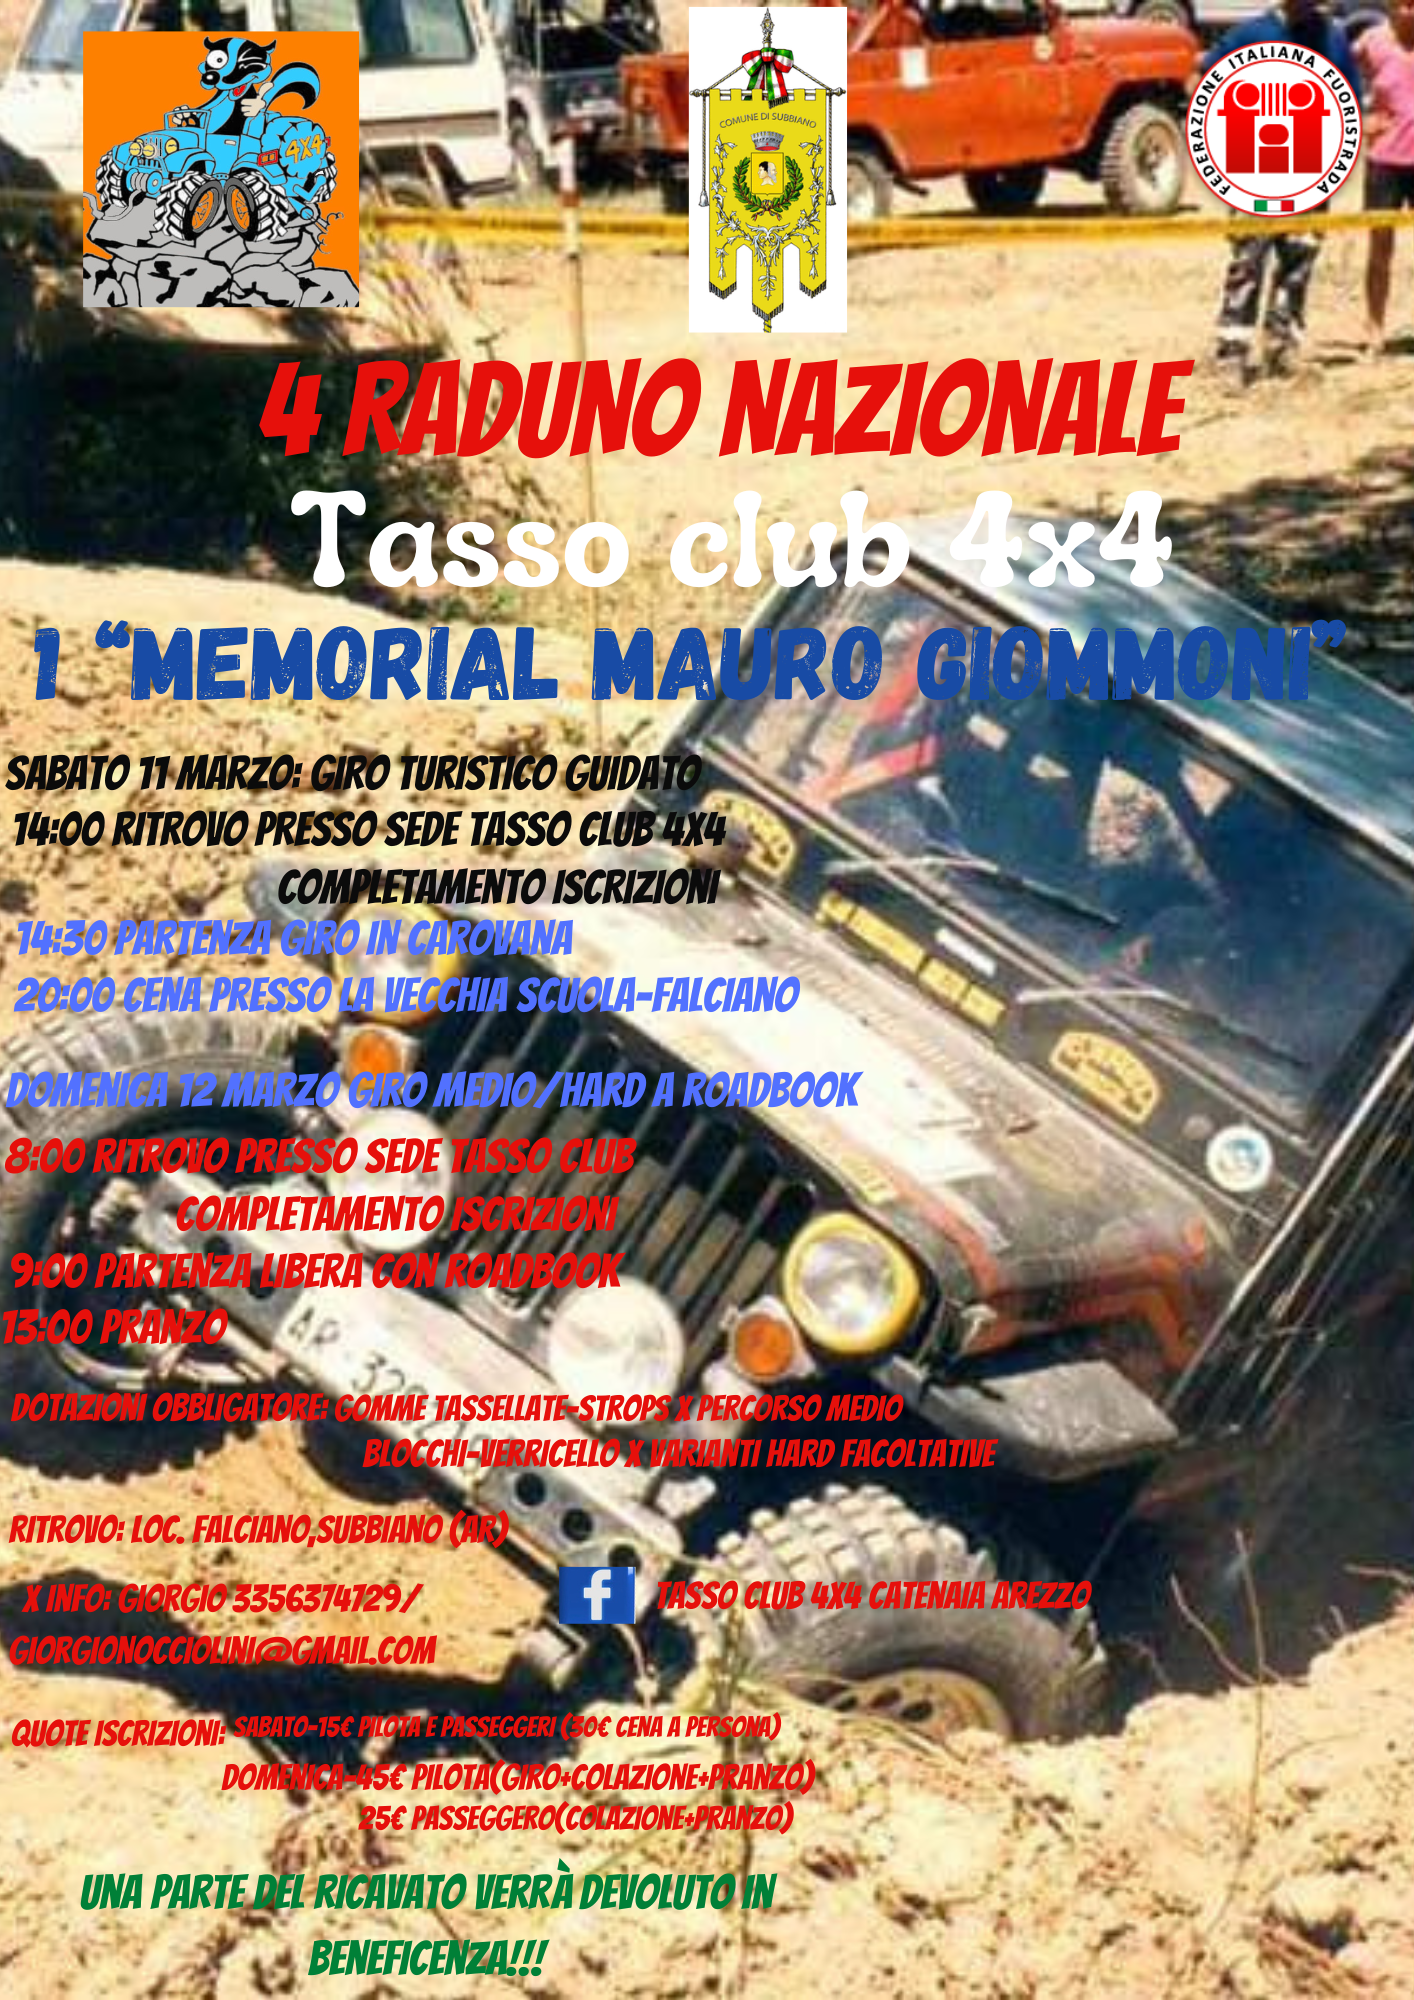 “1 Memorial Mauro Giommoni”